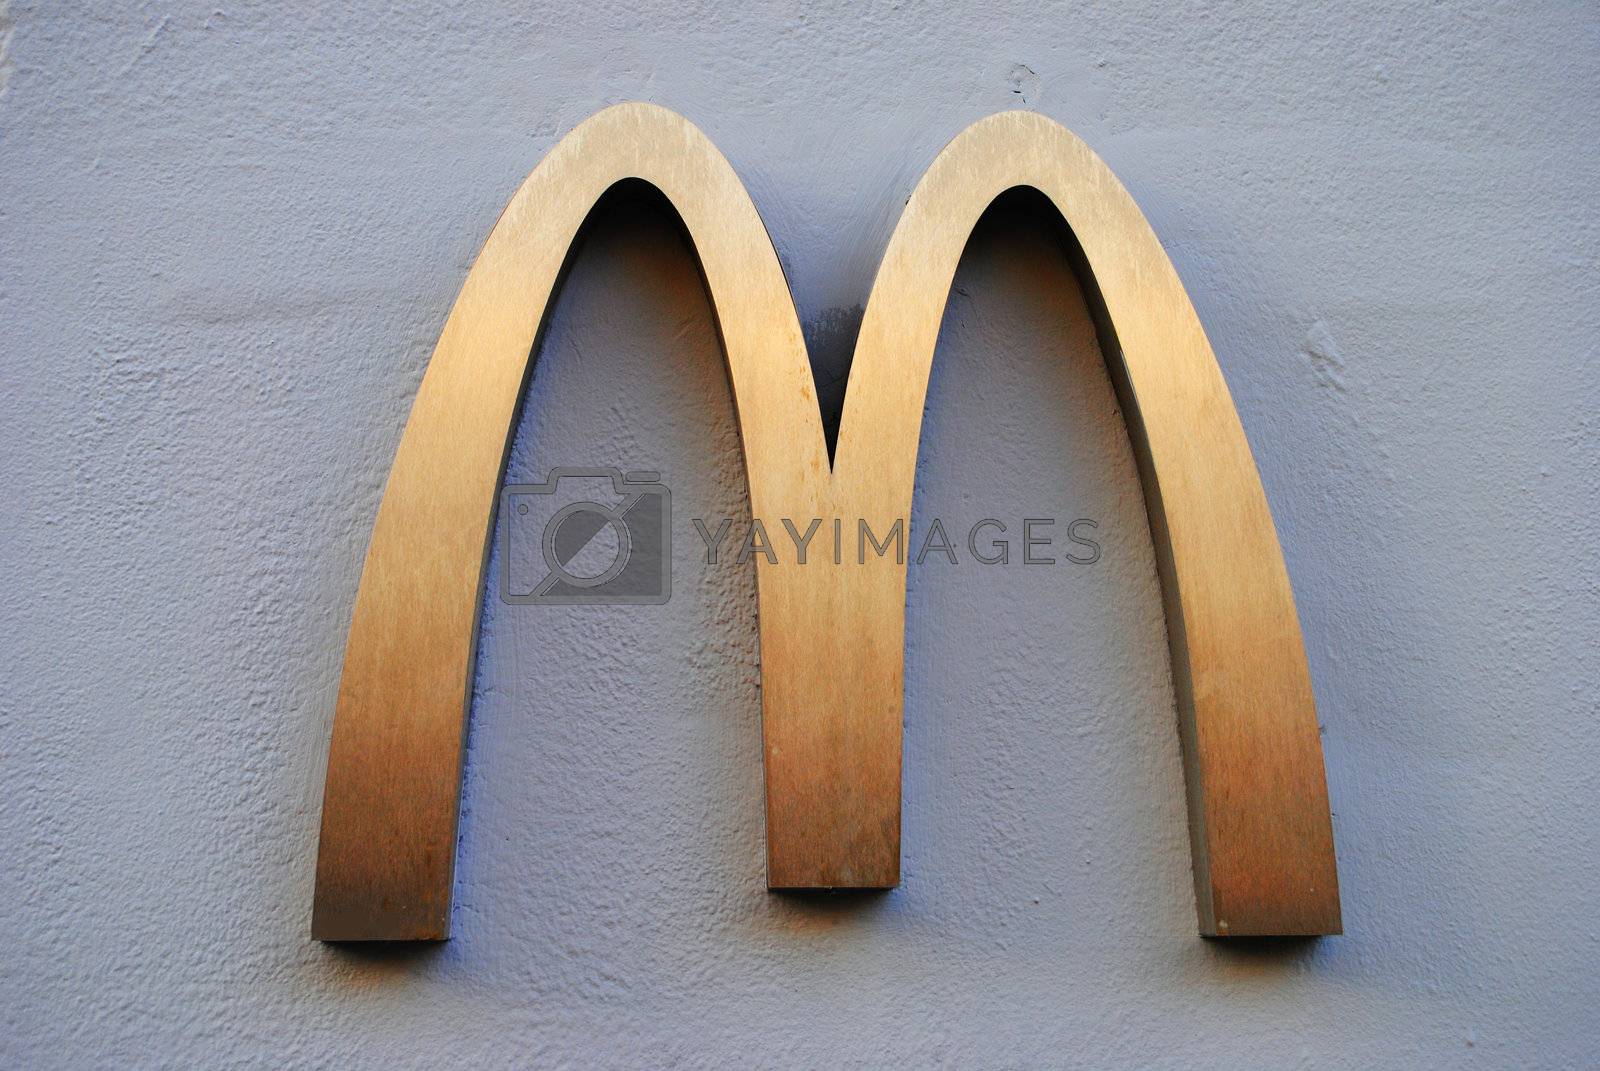 Royalty free image of McDonalds logo by Brage